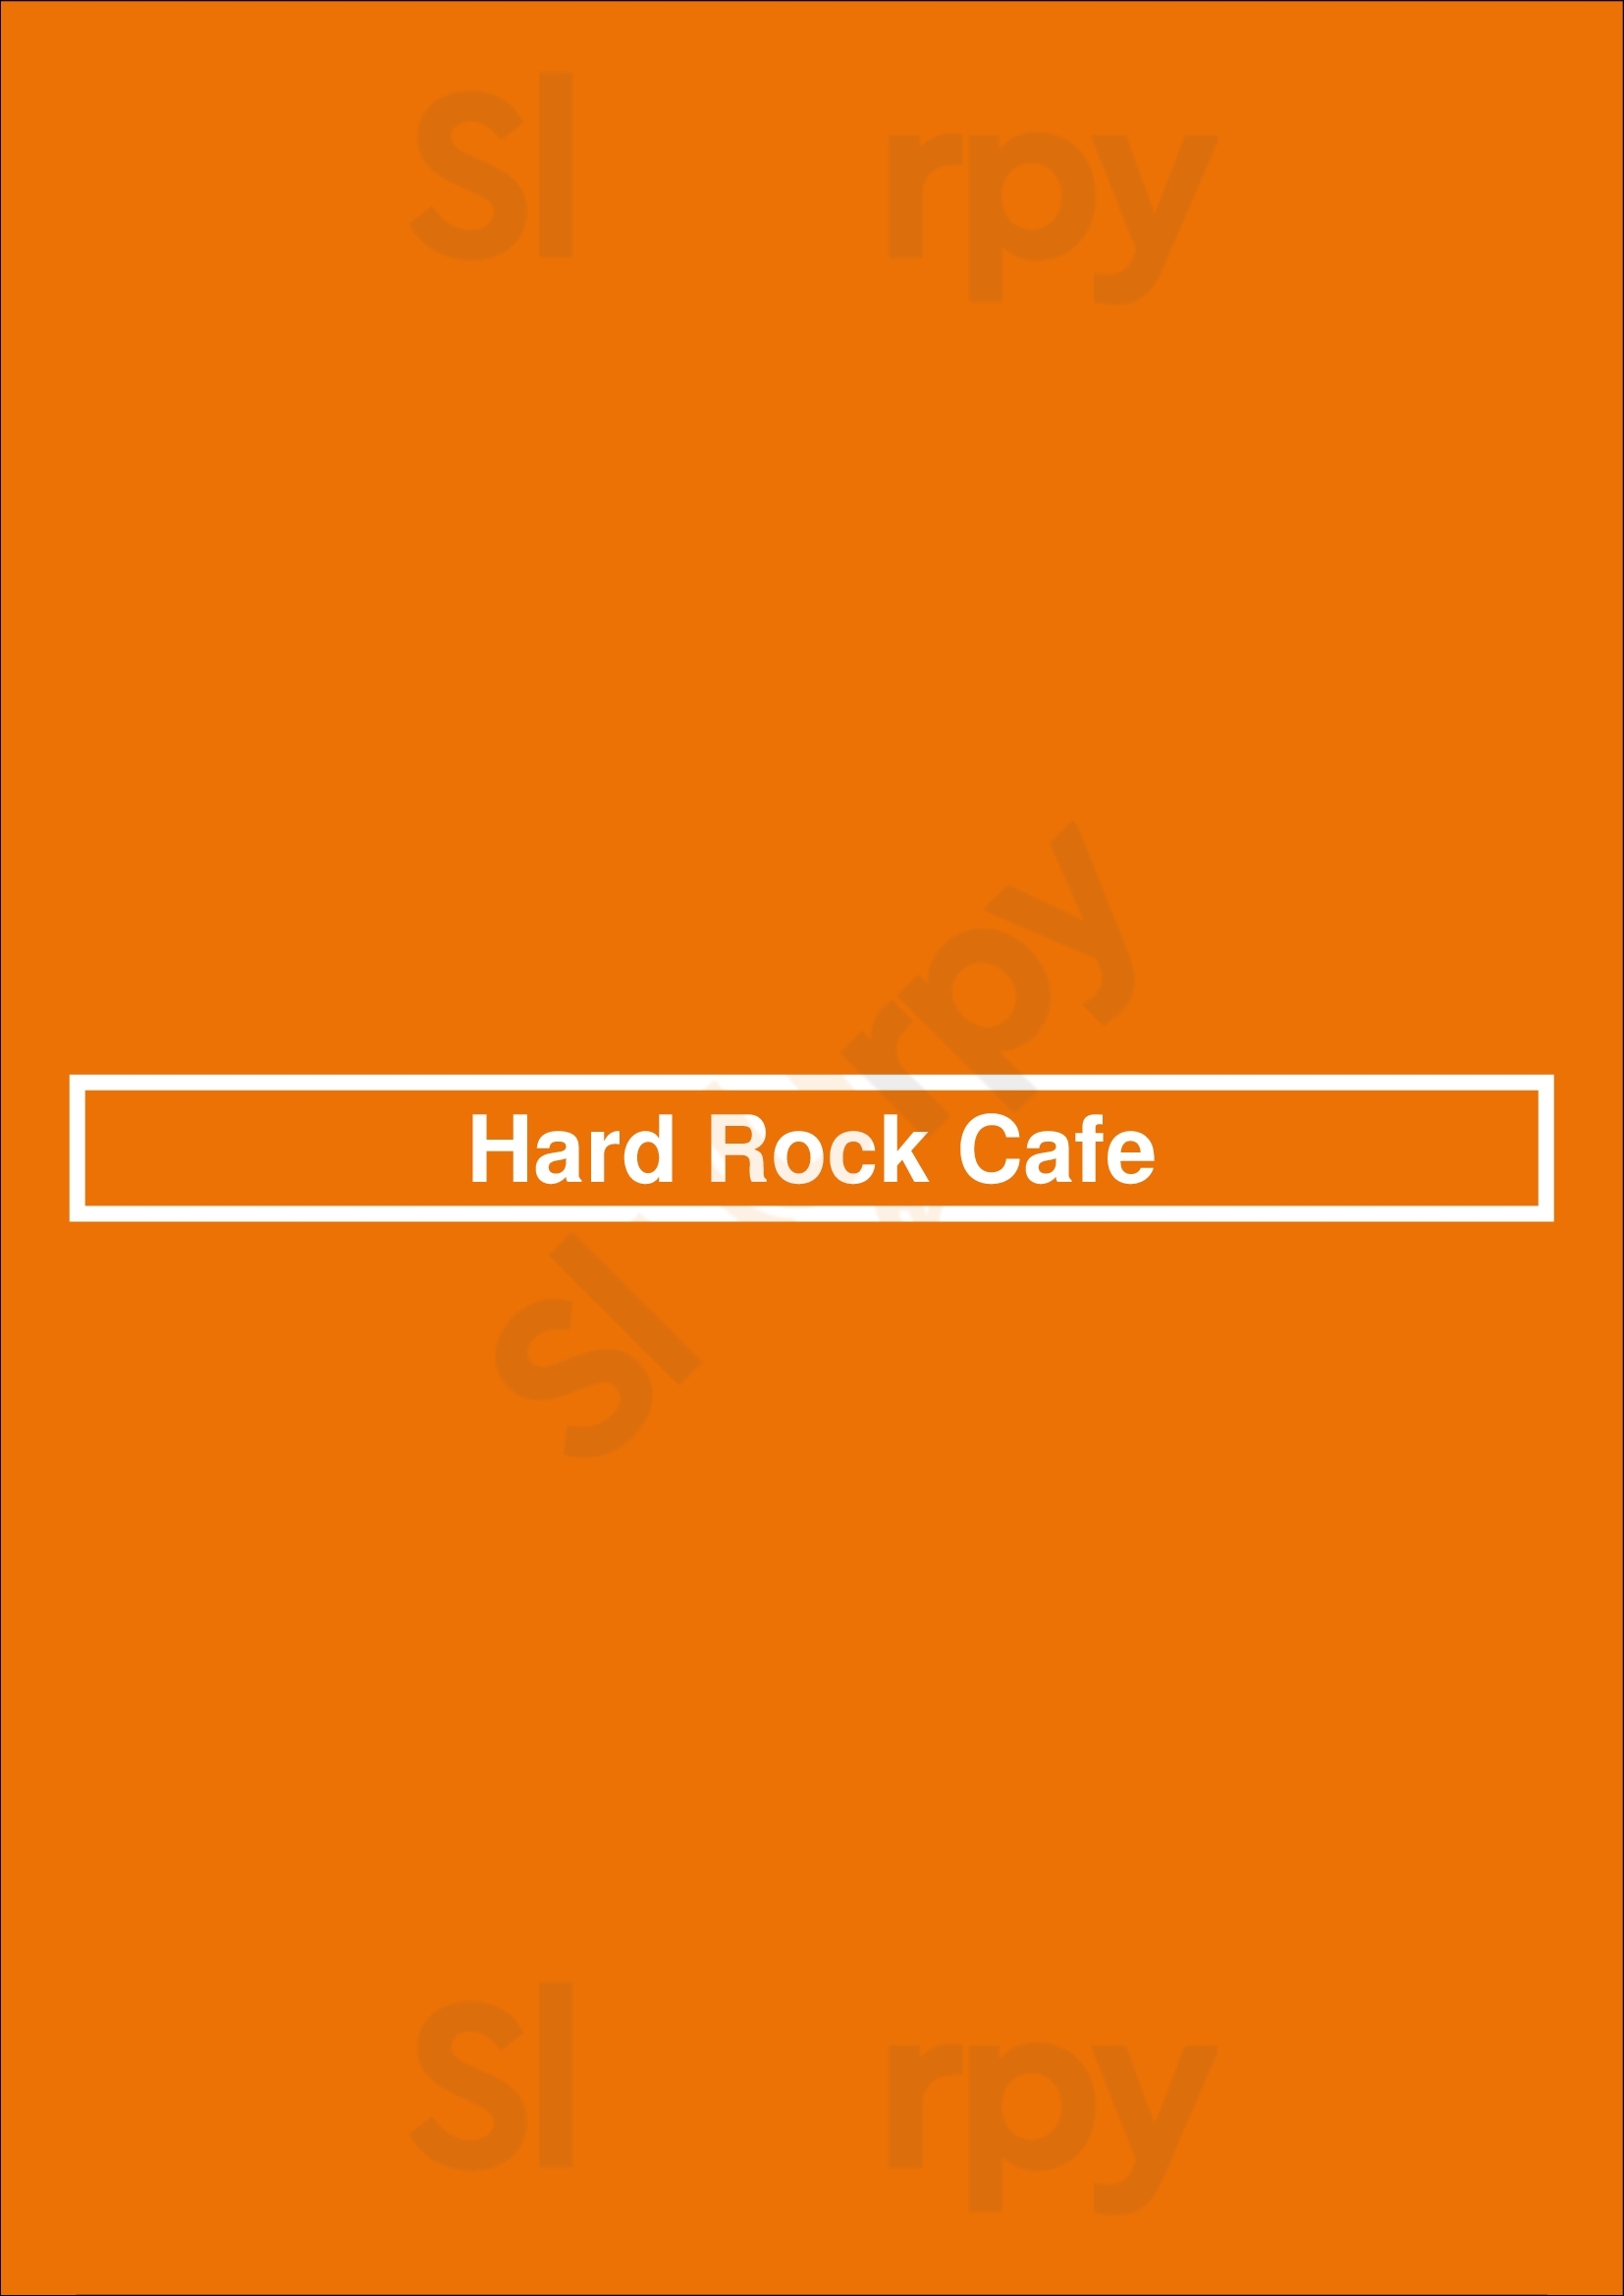 Hard Rock Cafe Barcelona Menu - 1